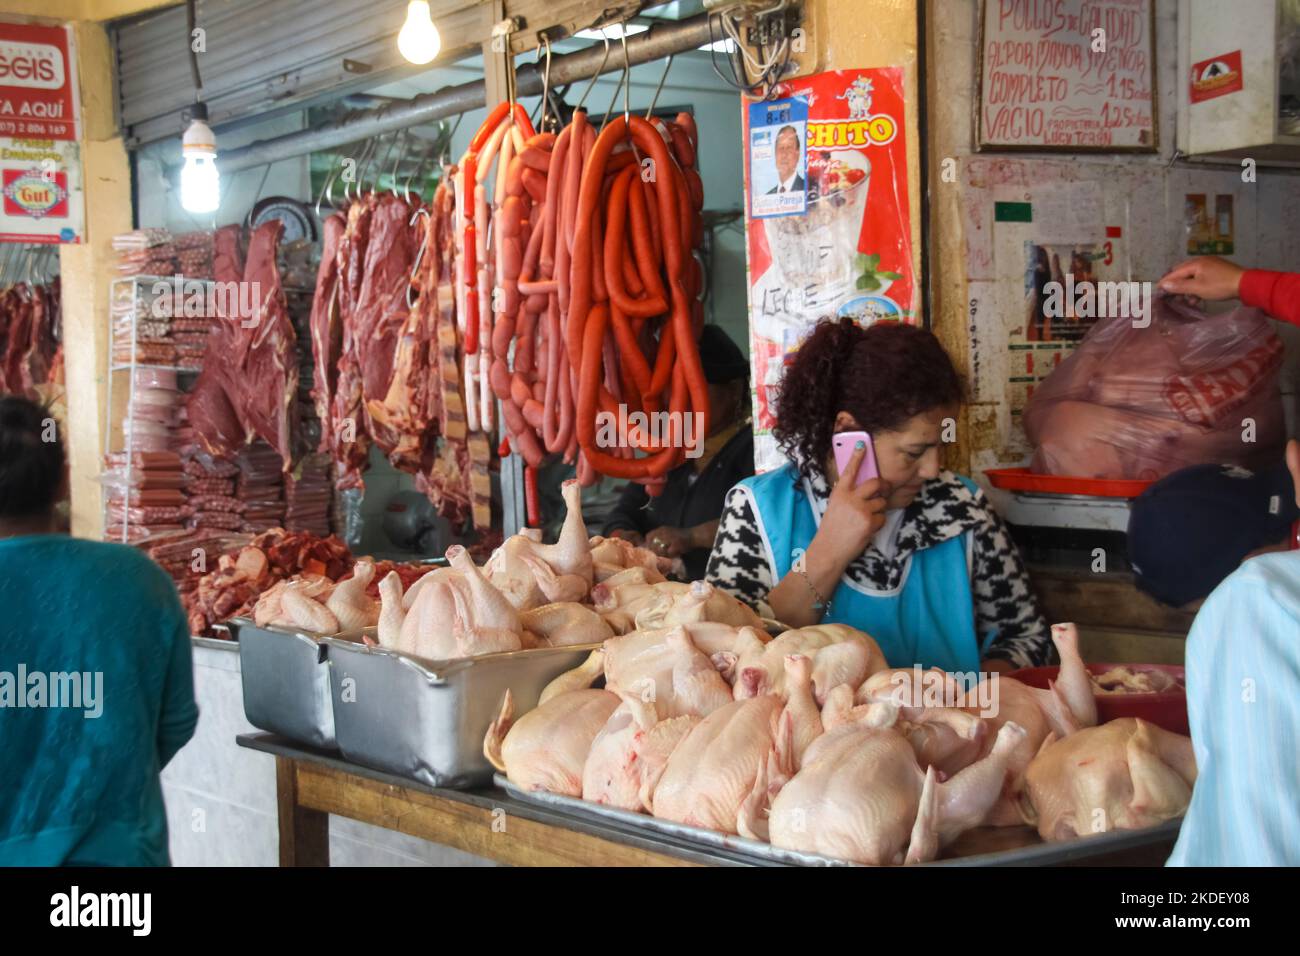 Food Market at Otavalo, Imbabura Province, Ecuador. Stock Photo